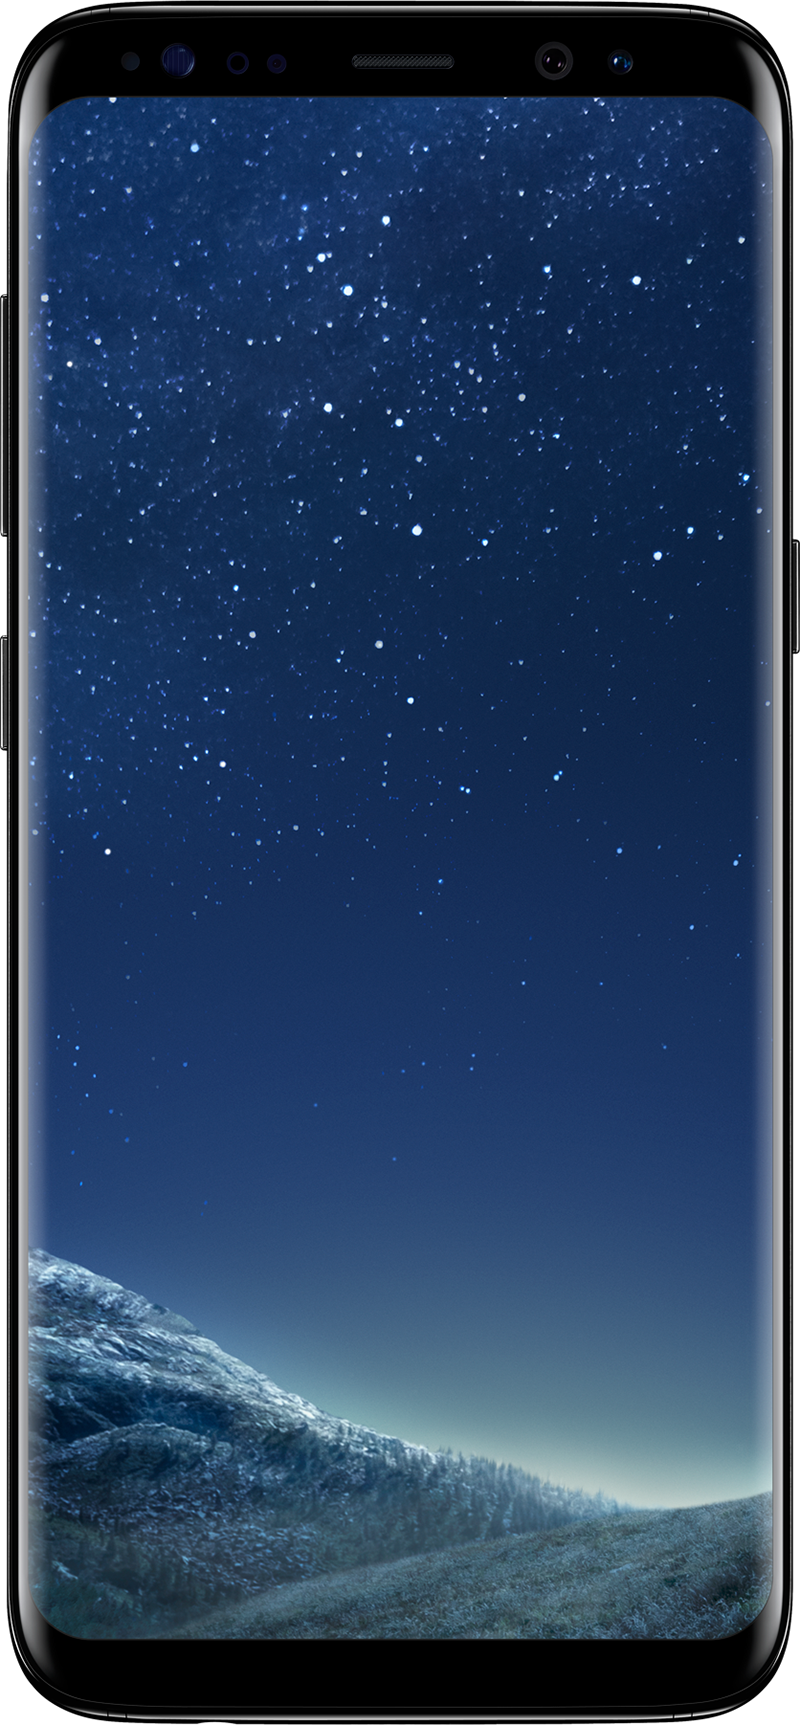 Samsung Galaxy S8 Noir Carbone 64Go